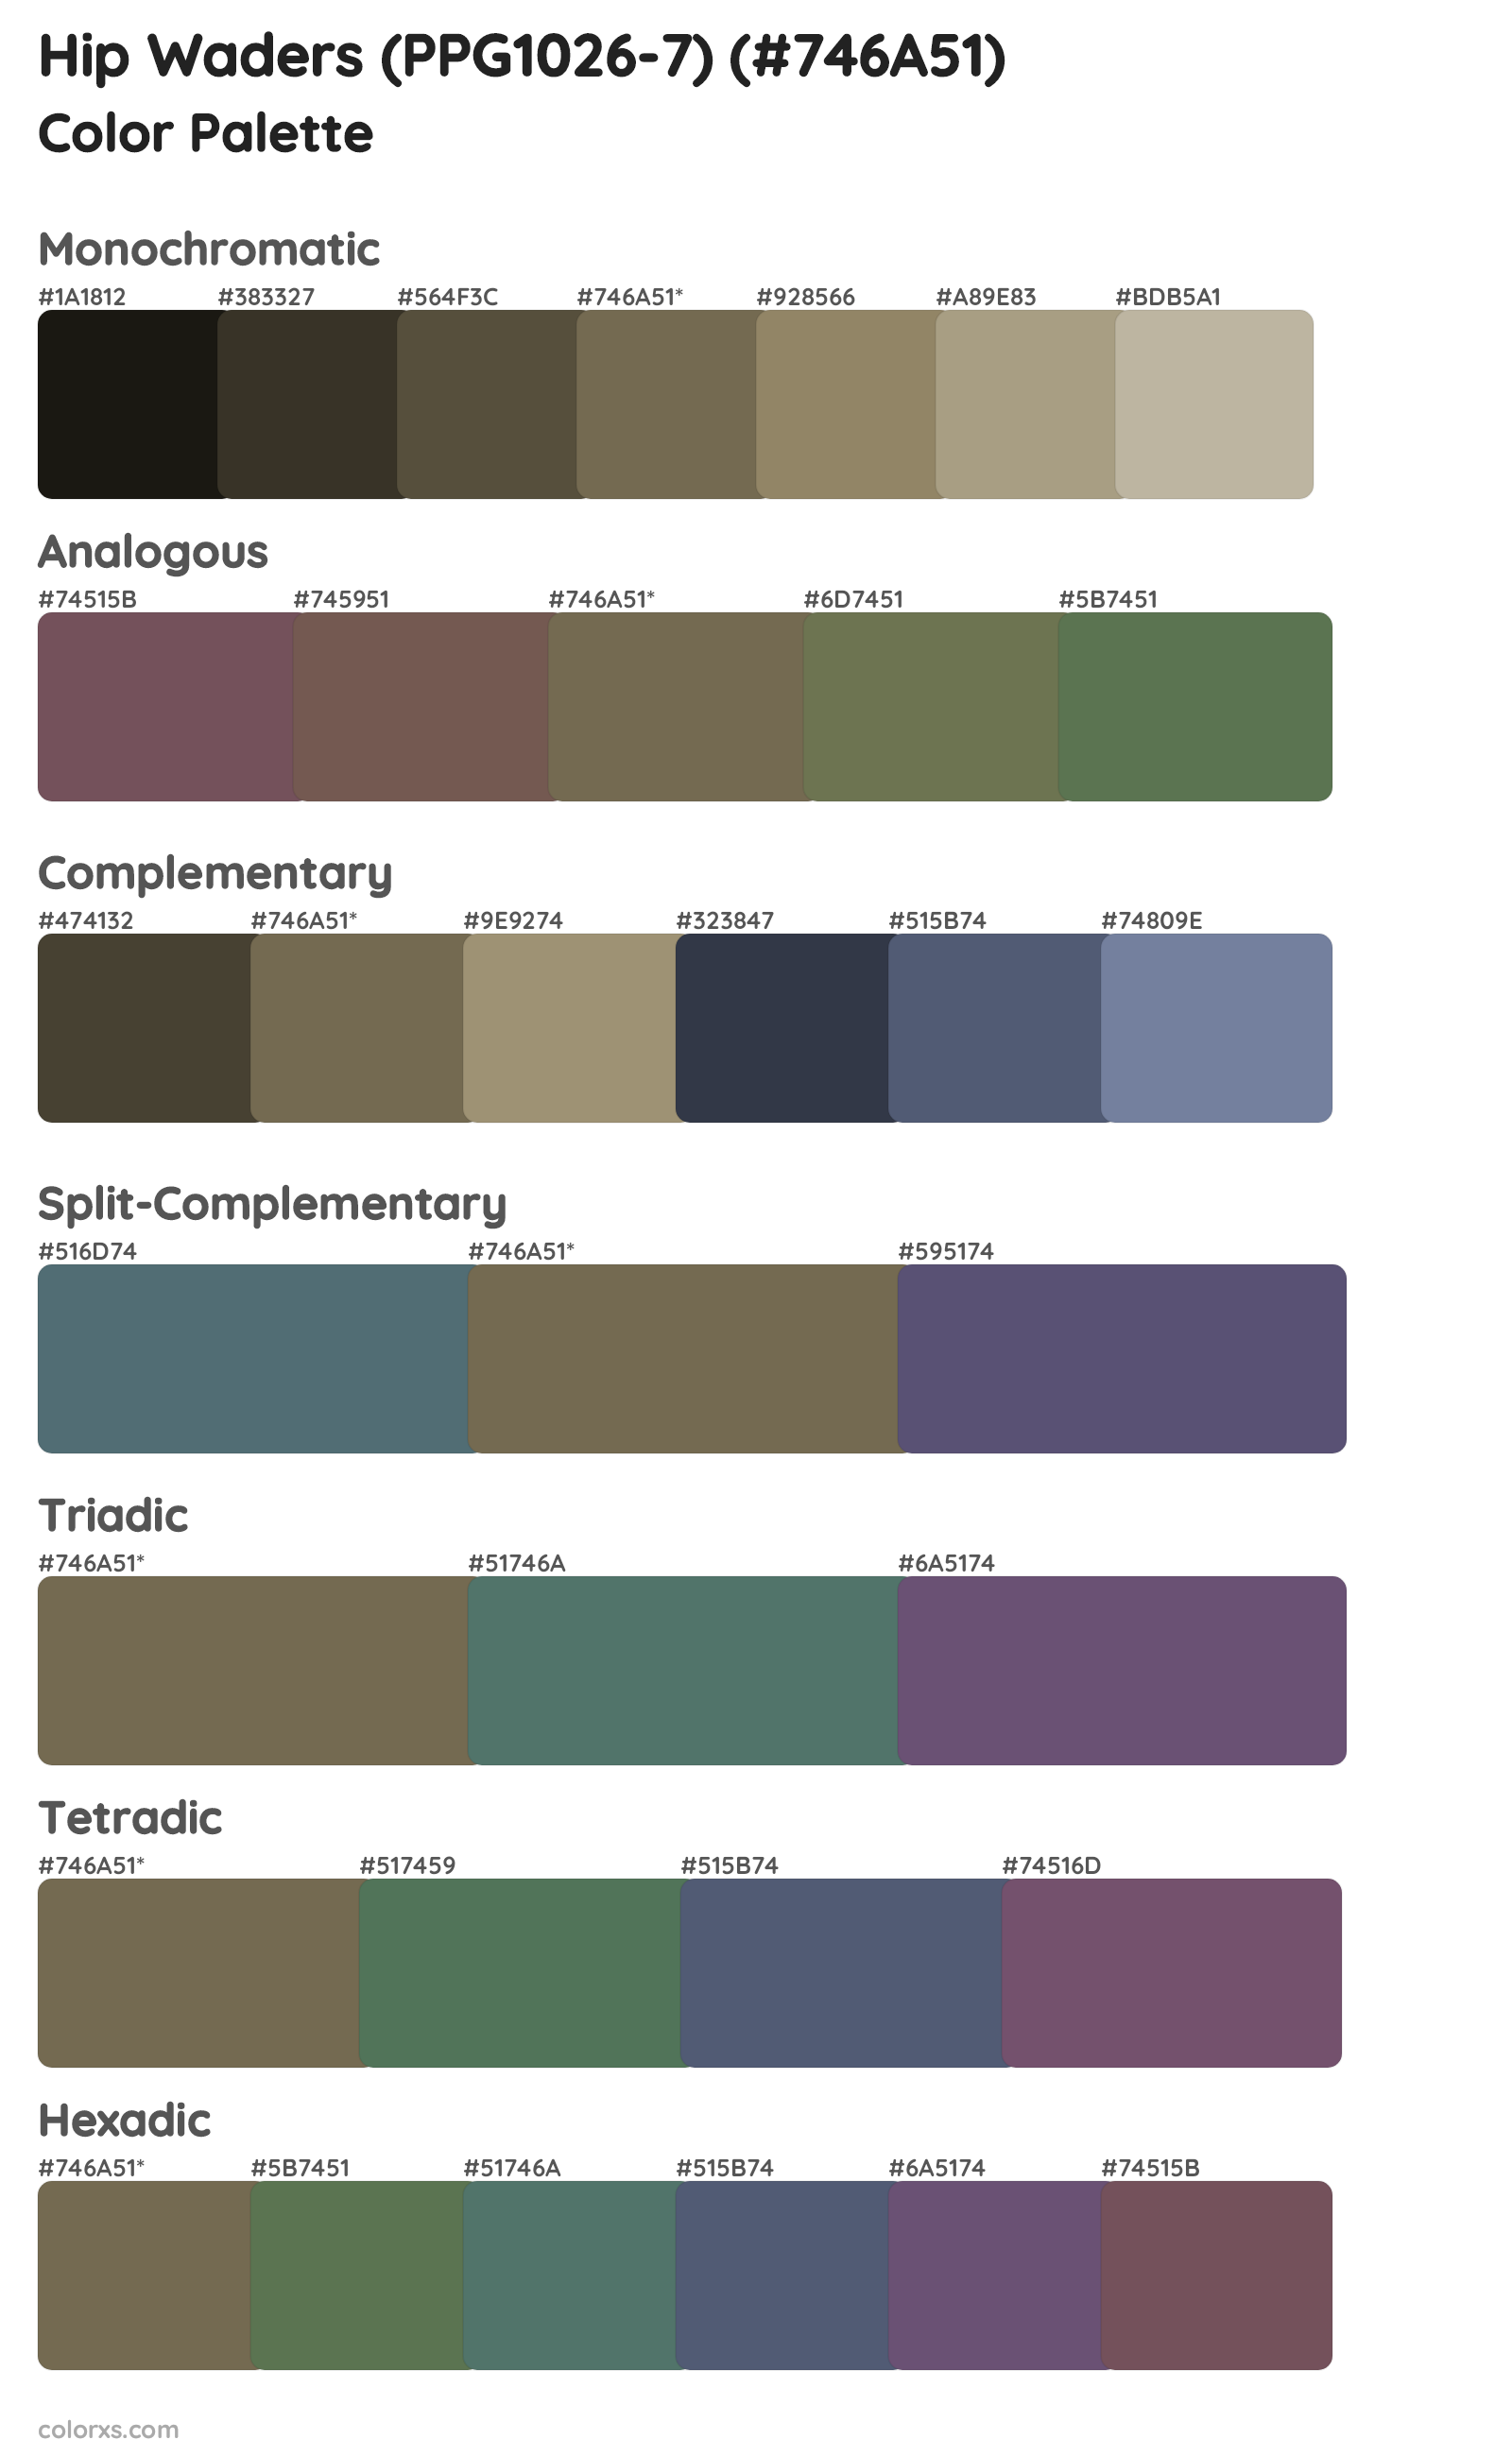 Hip Waders (PPG1026-7) Color Scheme Palettes